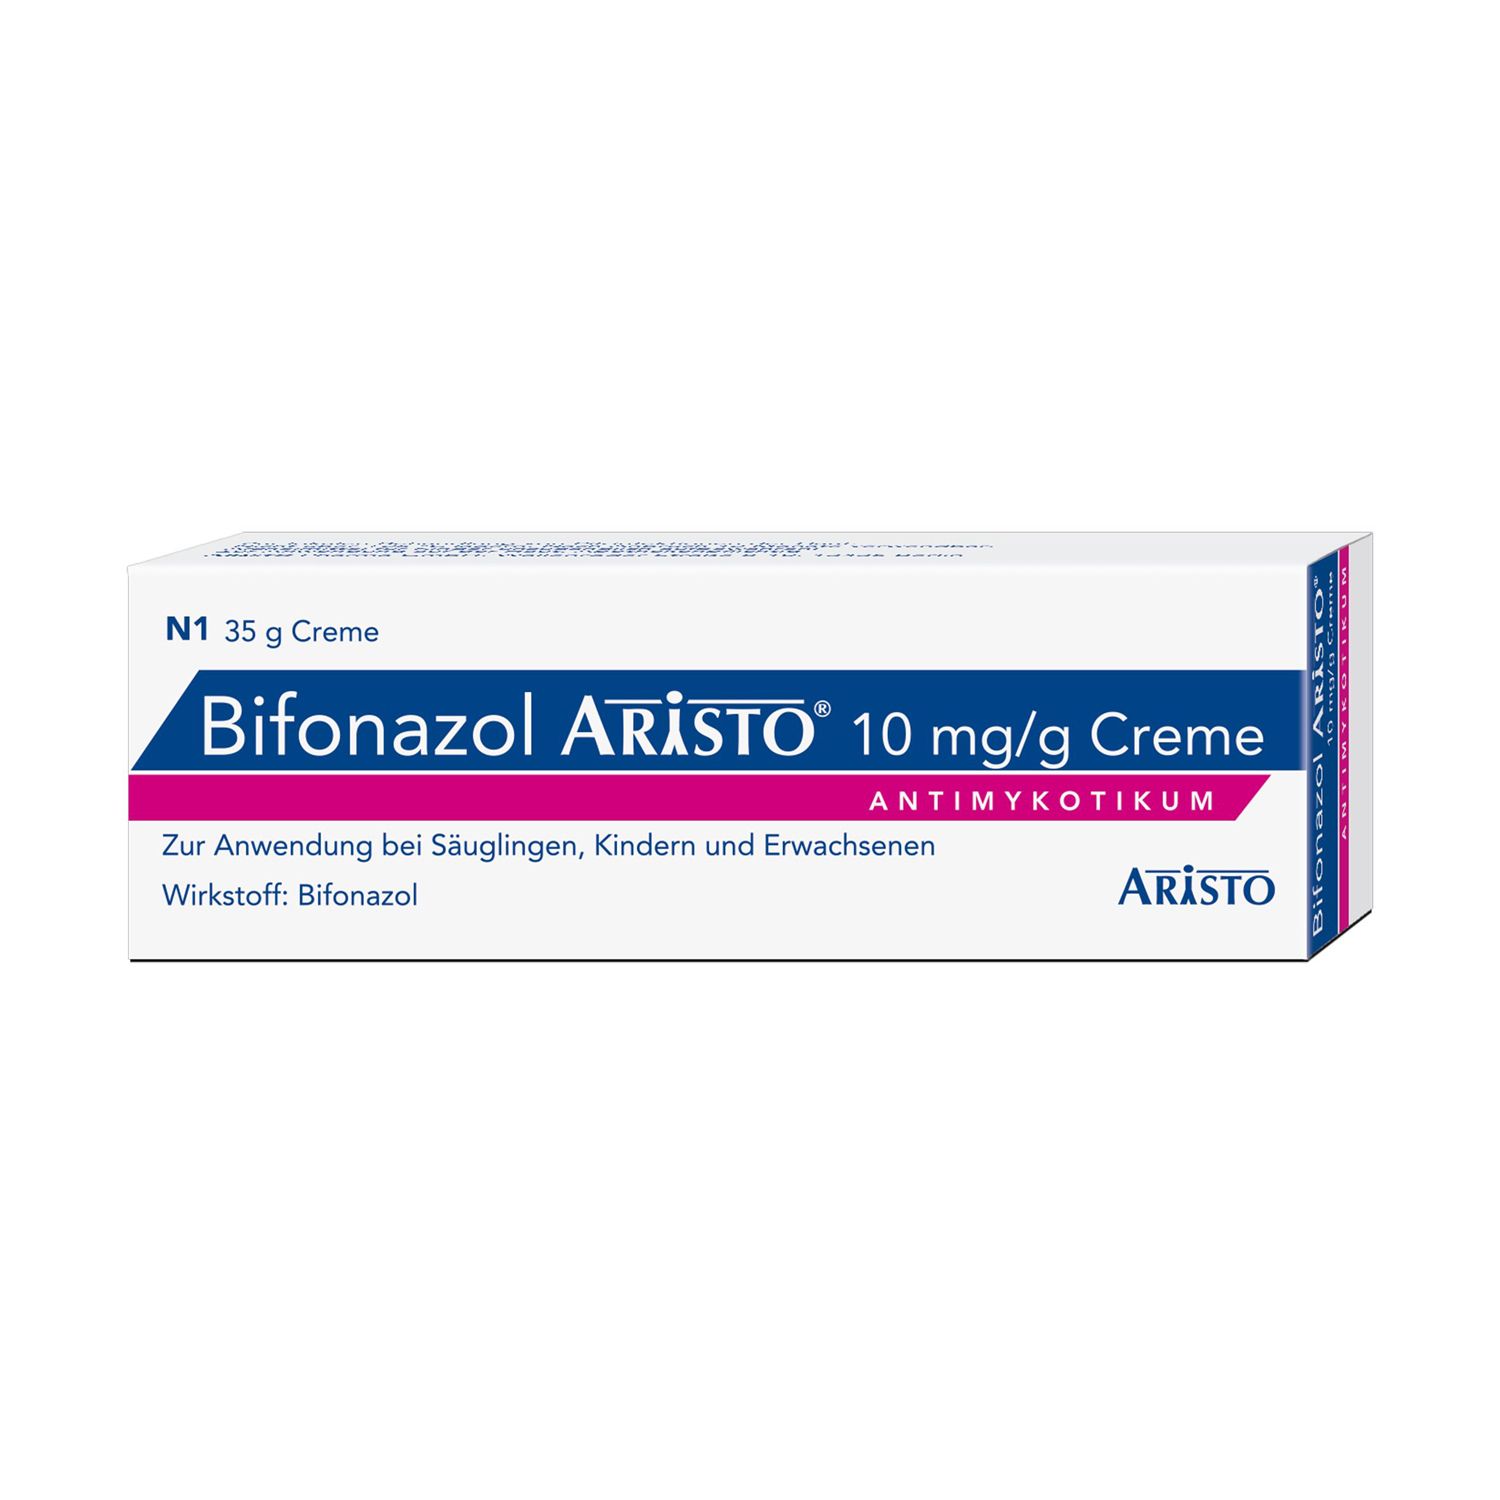 Bifonazol Aristo® 10 mg/g